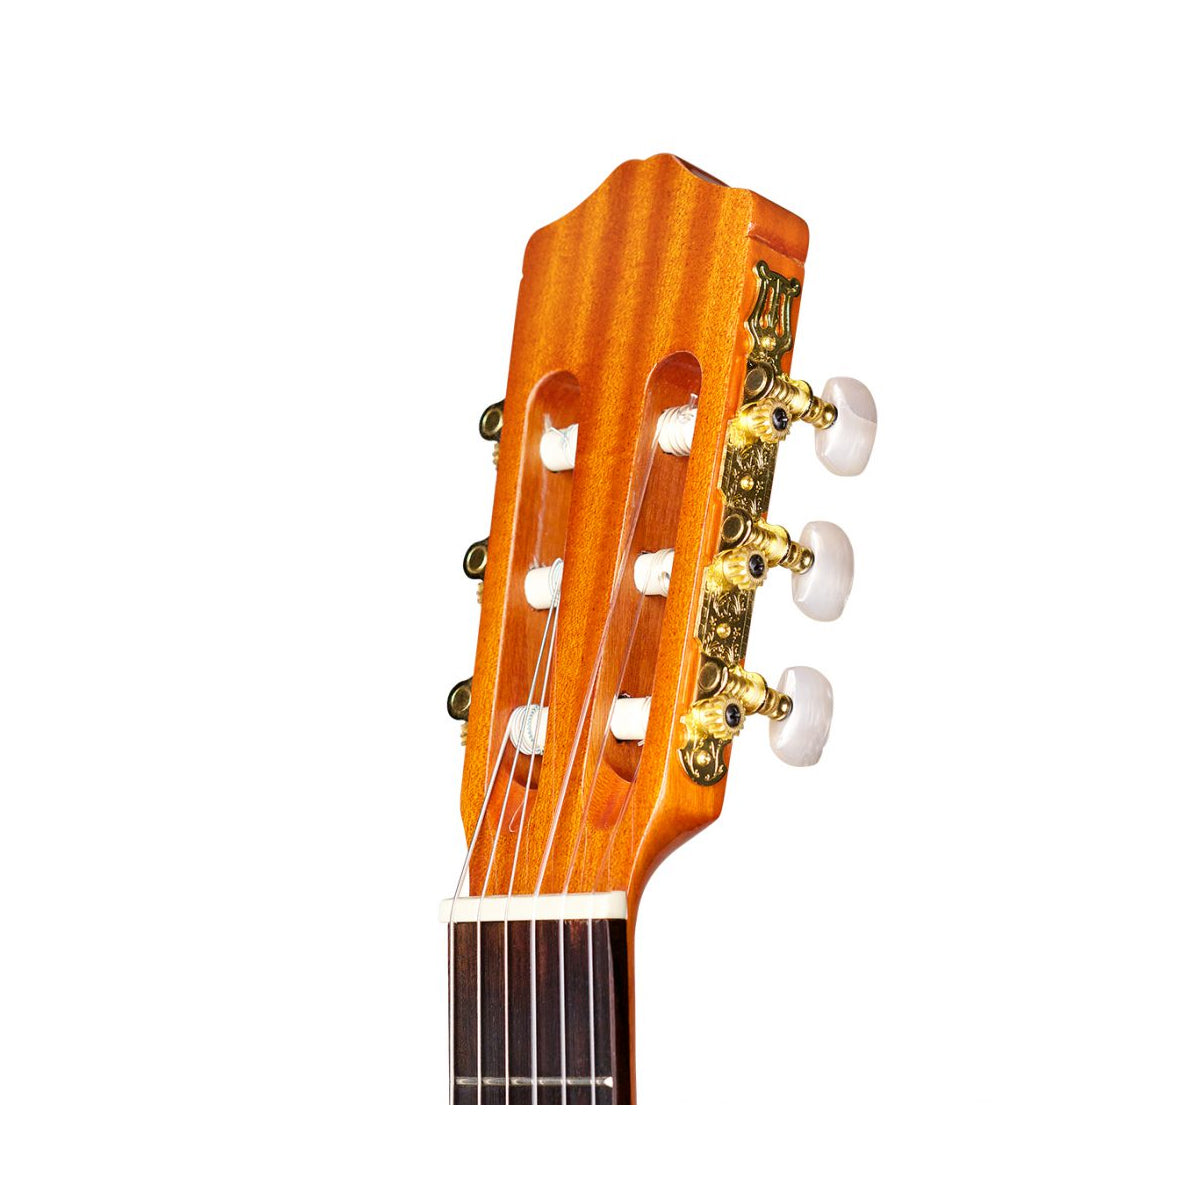 Cordoba Protege C1 Nylon String Acoustic Guitar With Gig Bag - Spruce